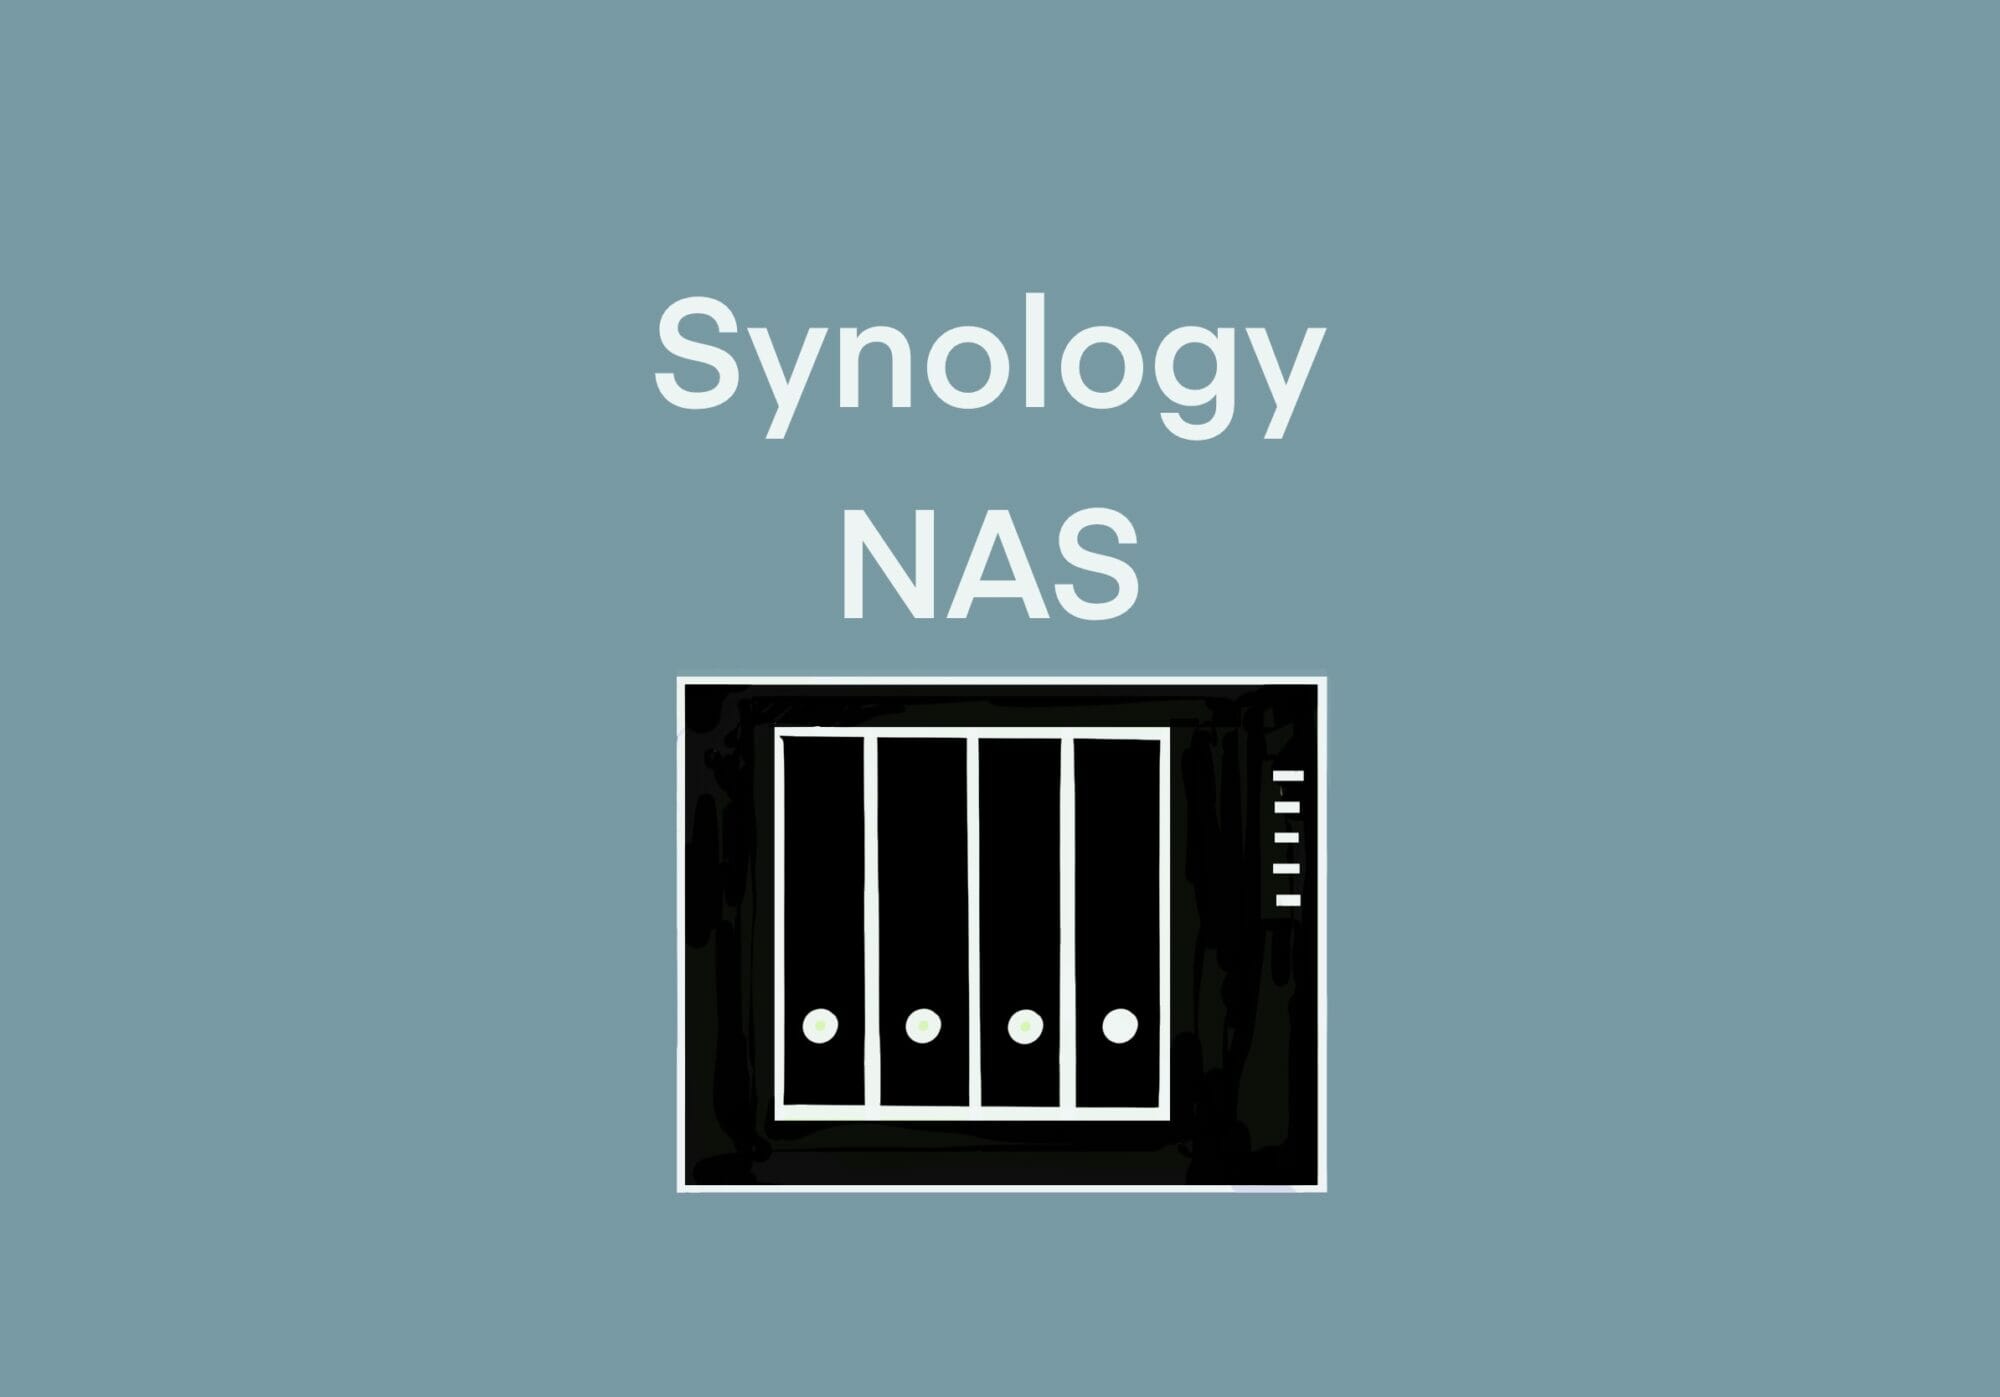 [Synology] C2 Storage? 単なるクラウドストレージではないと!? [2023/04/23] ID42119